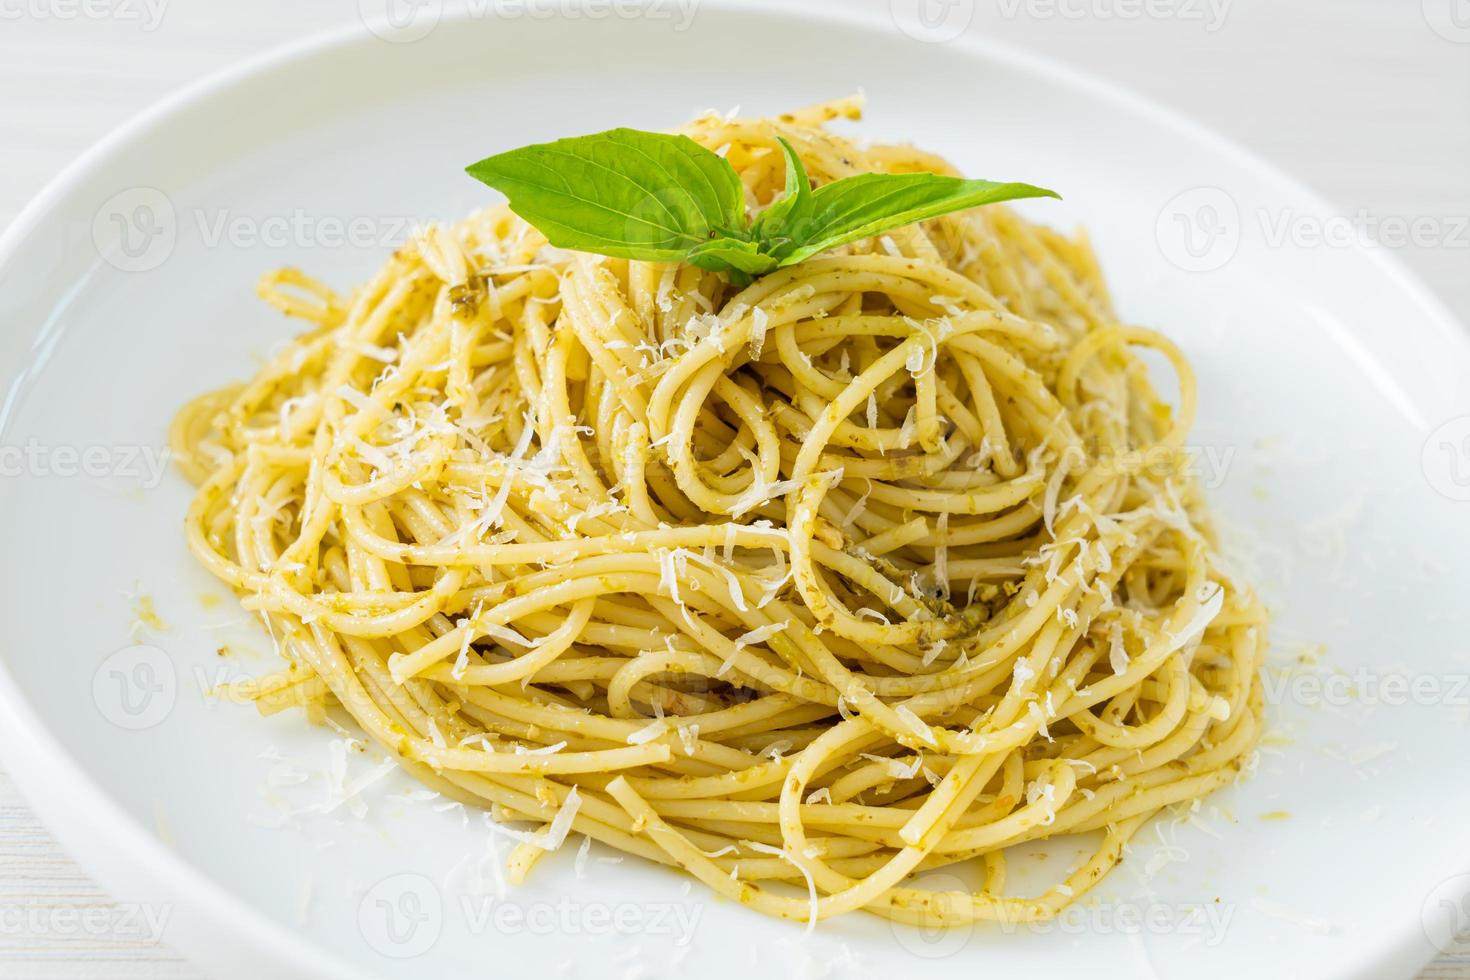 Pesto spaghetti pasta - vegetarian food and Italian food style photo